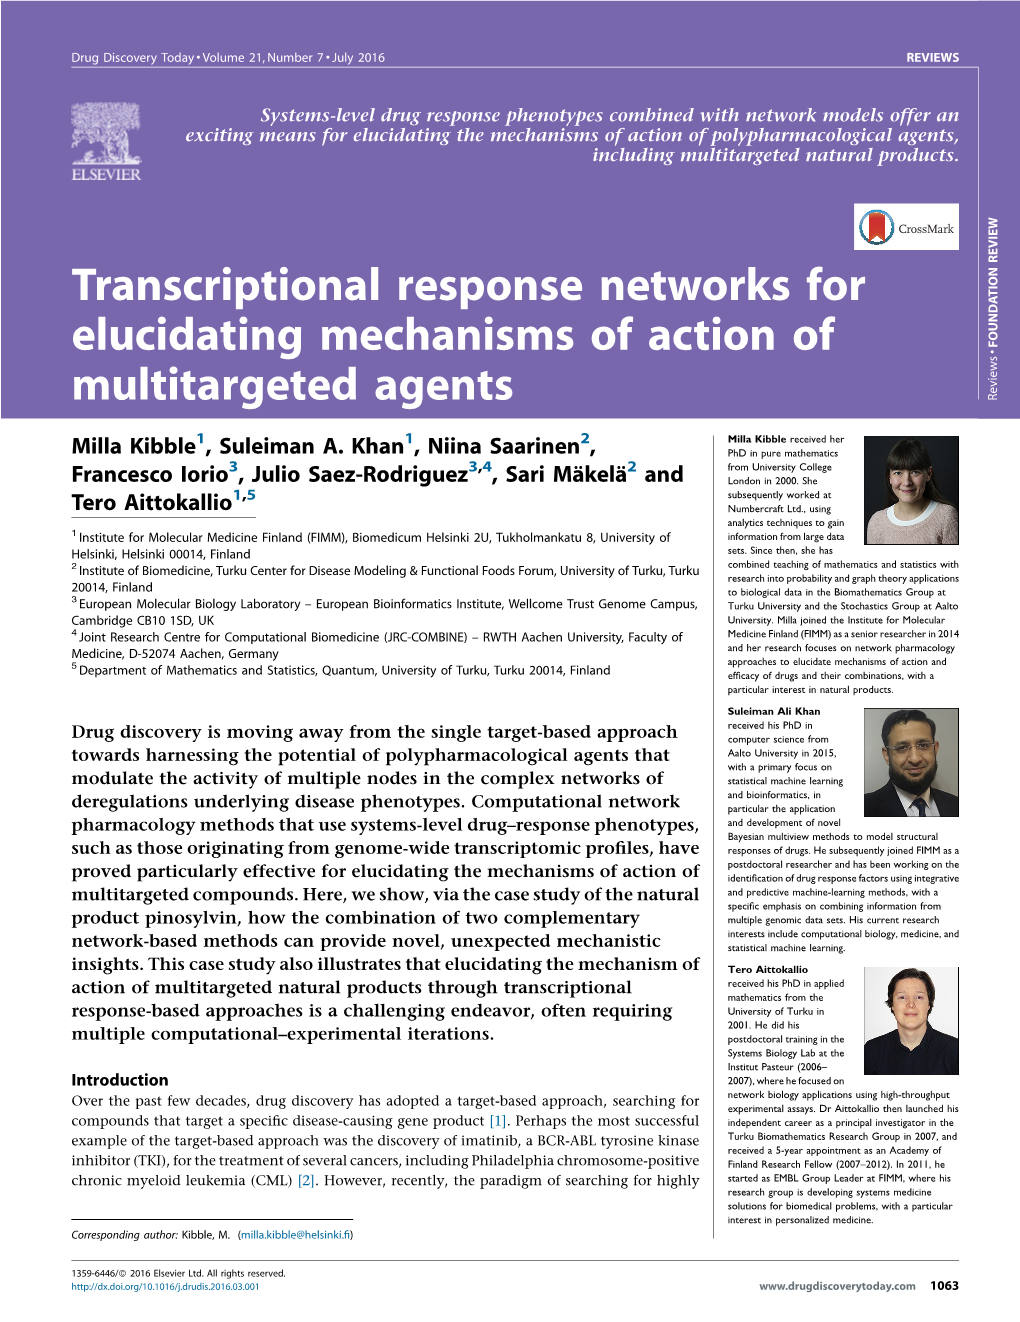 Transcriptional Response Networks for Elucidating Mechanisms of Action Of